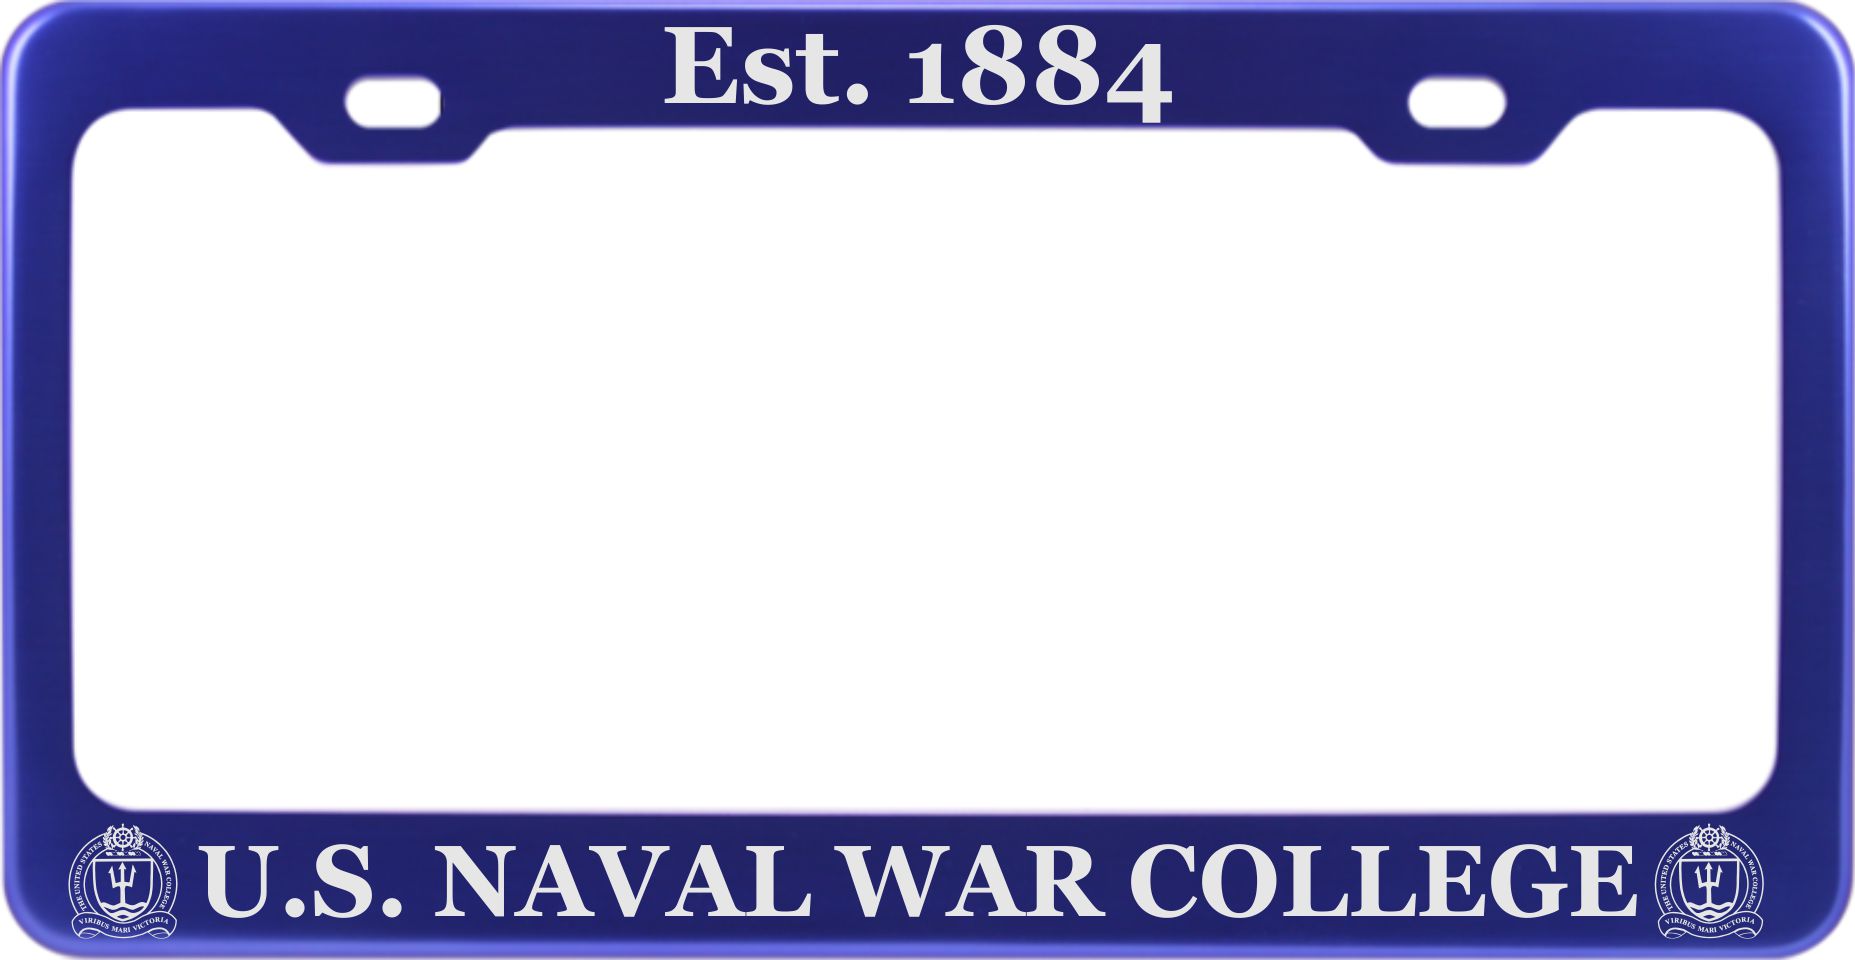 Est 1884 - U.S. NAVAL WAR COLLEGE - custom aluminum license plate frame (Blue)